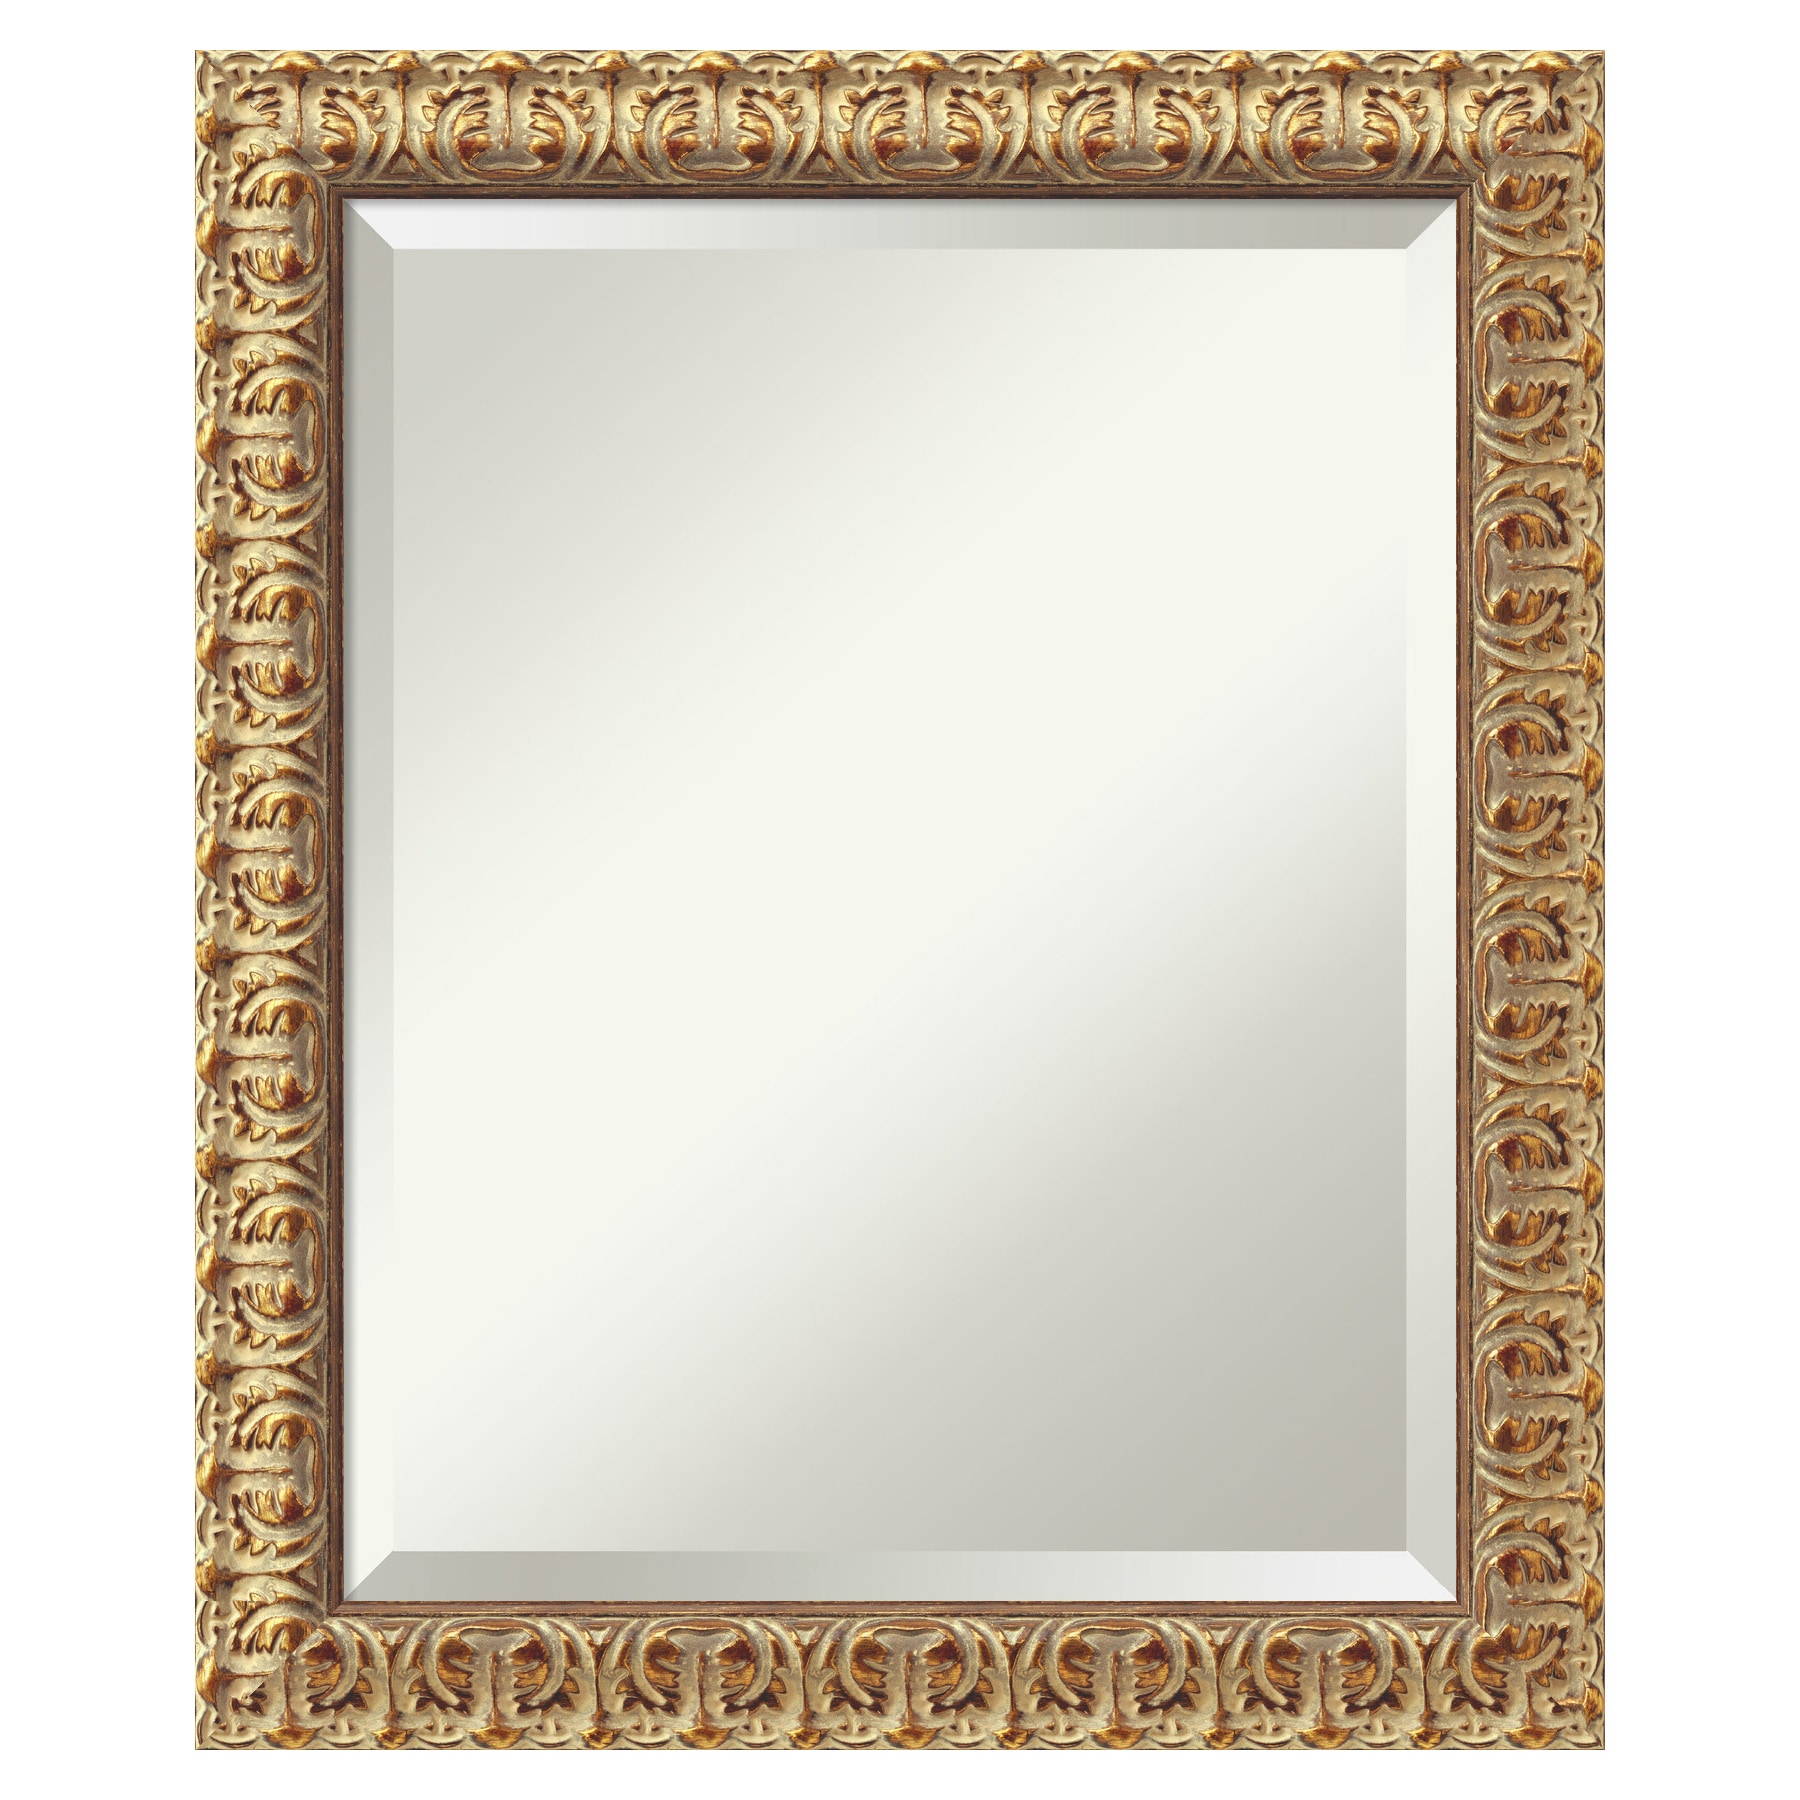 vintage mirror frame